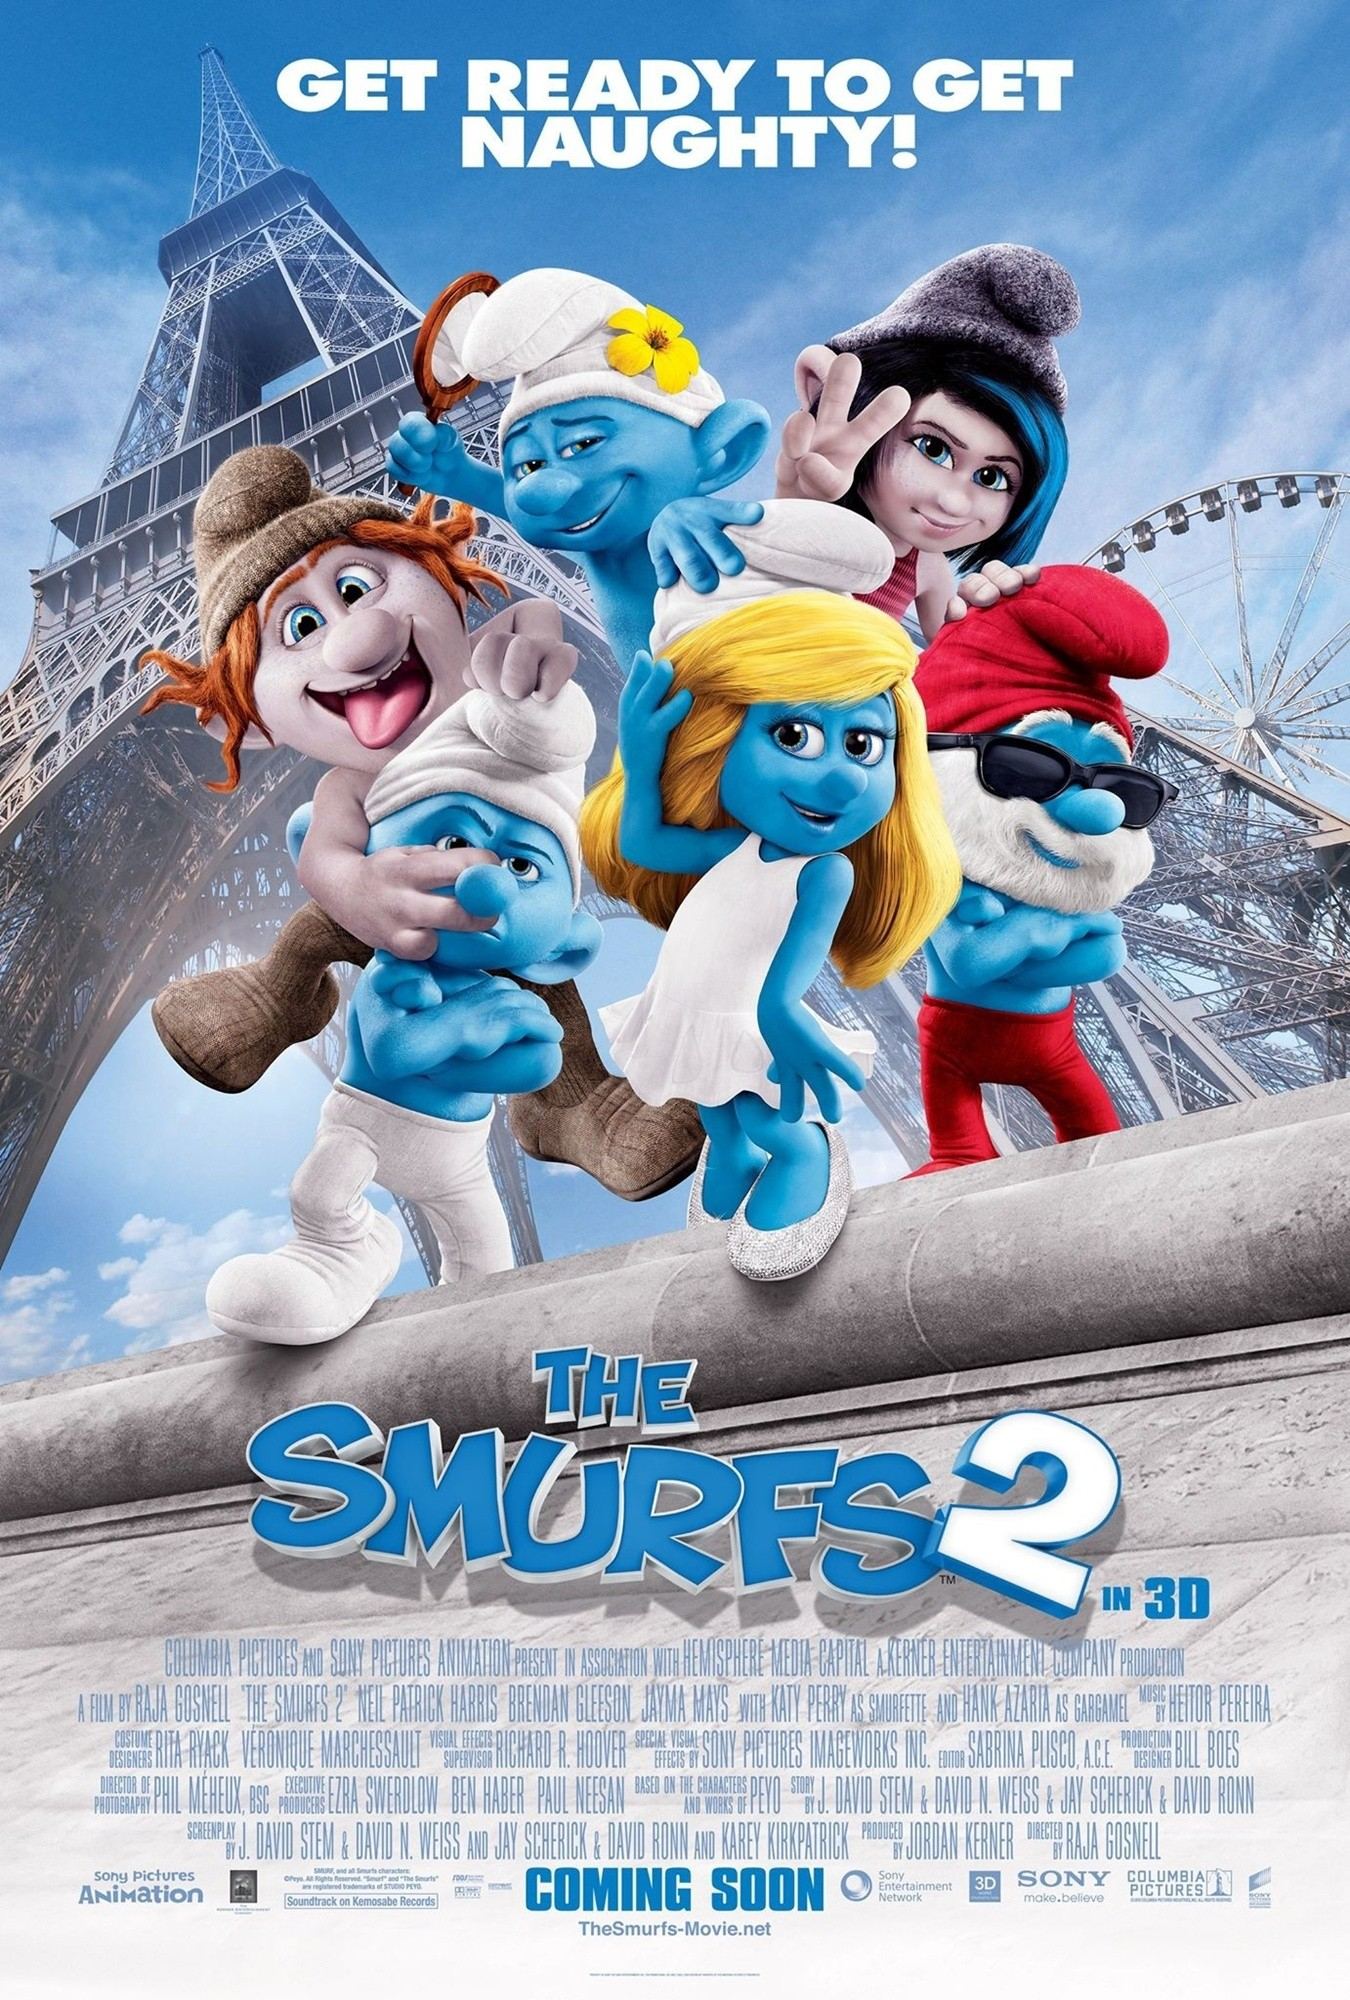 The Smurfs 2 (2013) 300MB BRRip 480p Dual Audio Hindi English Esubs DAKU RG} GreatPalash} mkv preview 1